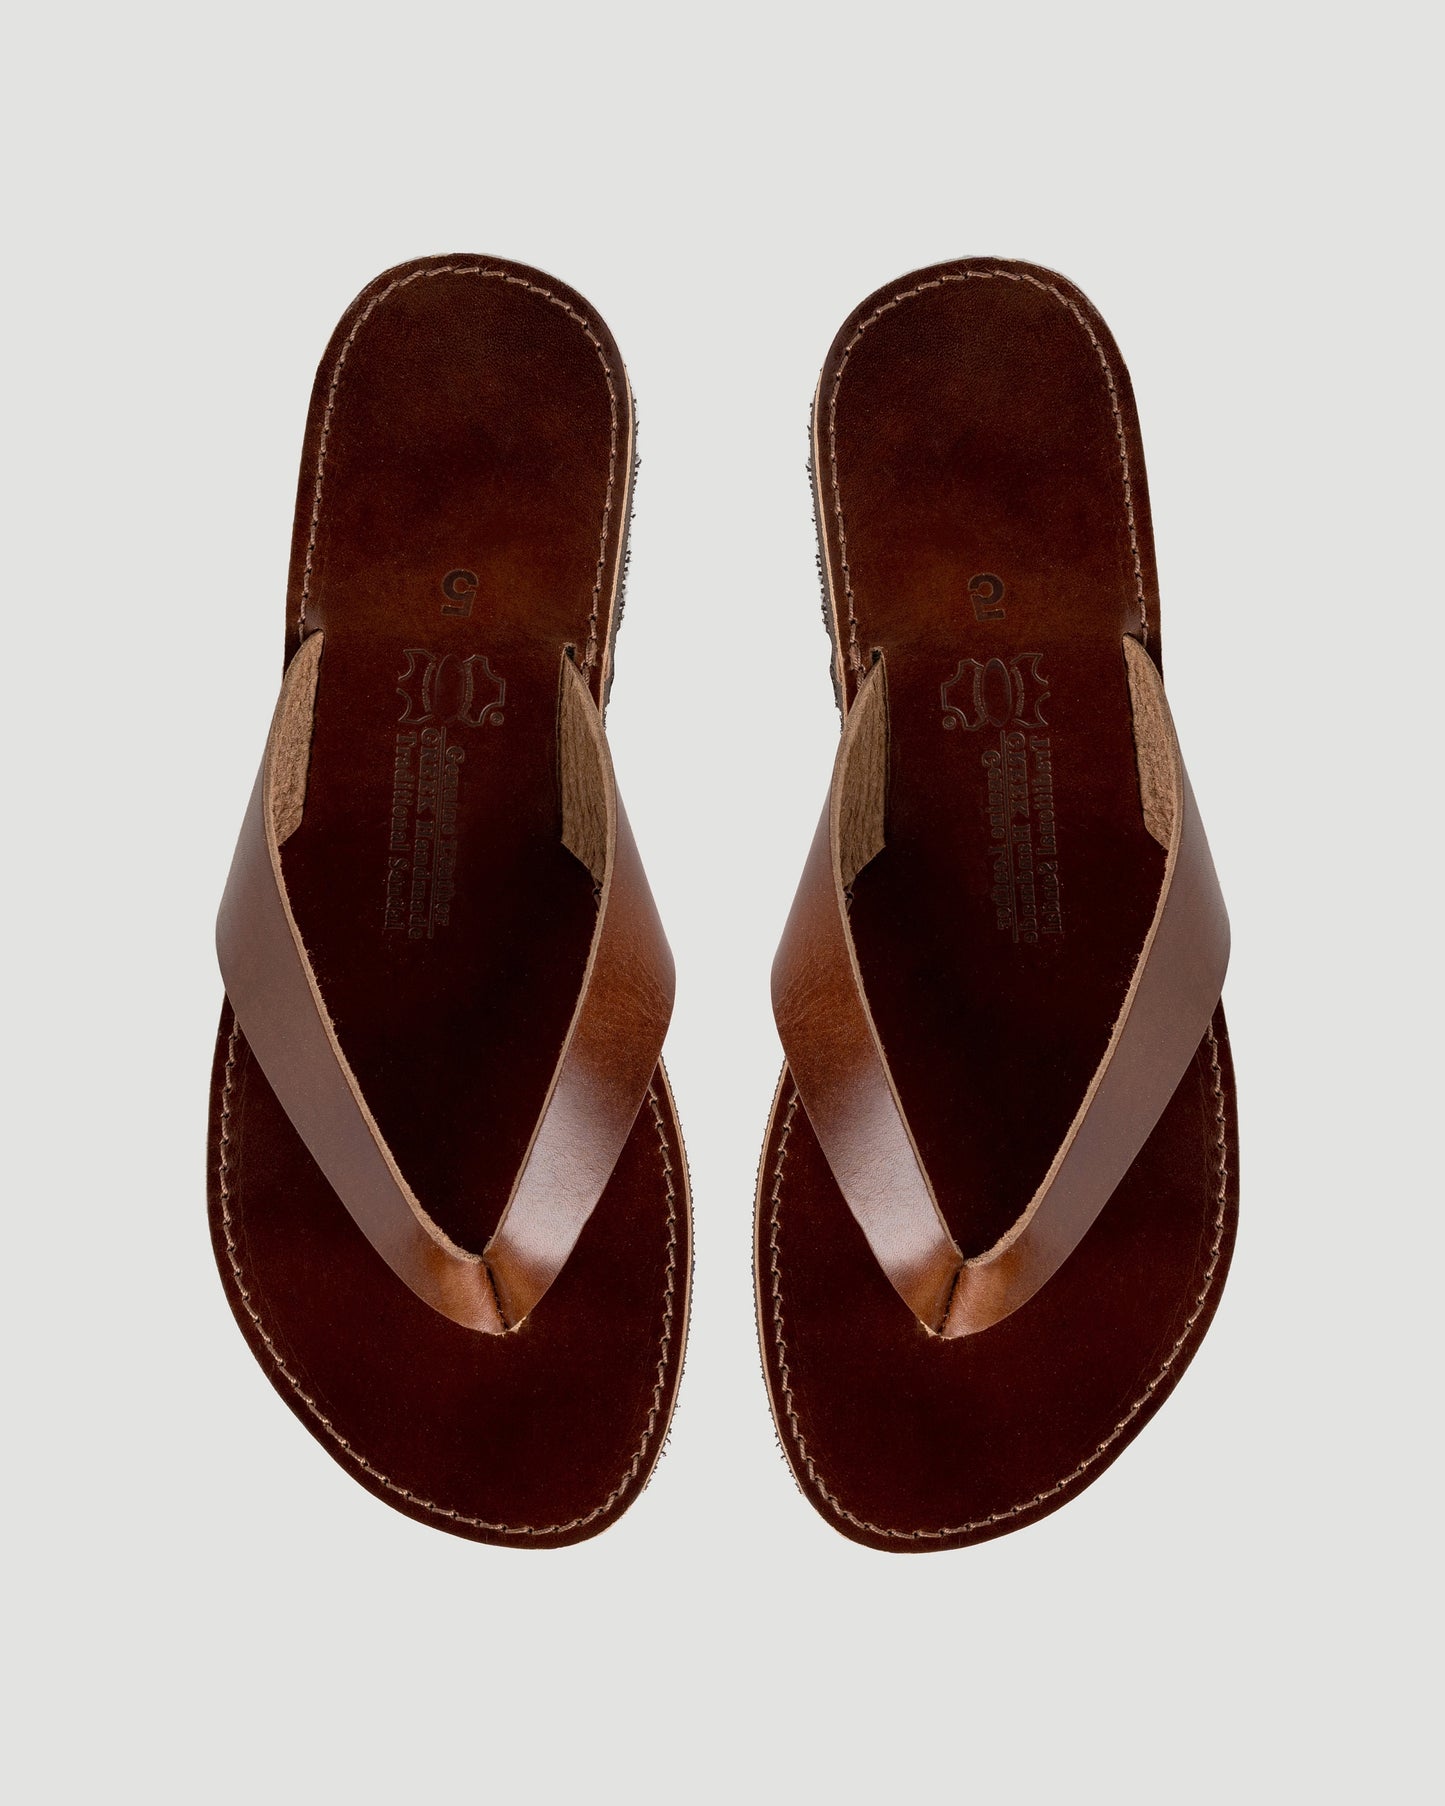 Mens sandals leather, Leather Greek sandals, Minimalist sandals, Sandales cuir homme, Sandalen herren, Sandali uomo